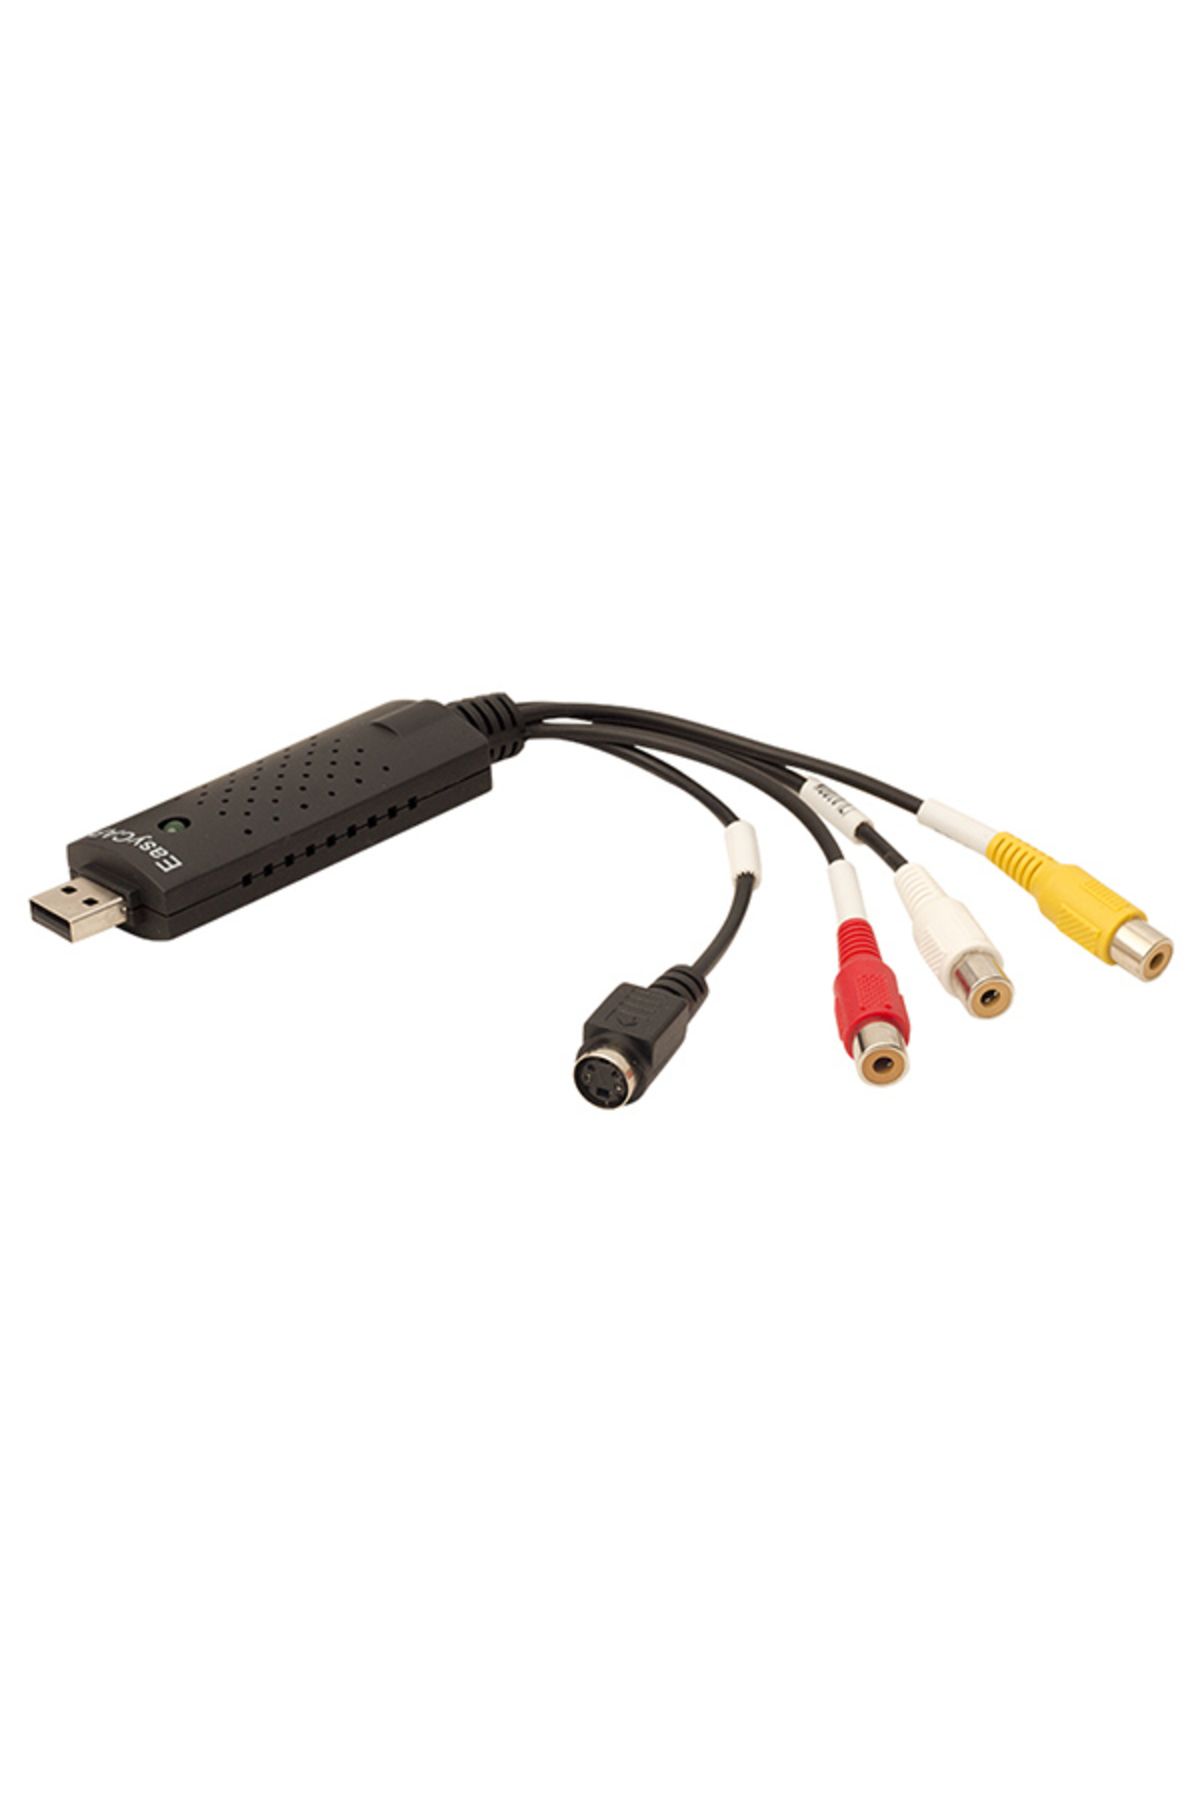 Powermaster PM-30051 USB CAPTURE 2.0 VİDEO EDİT EASYCAP